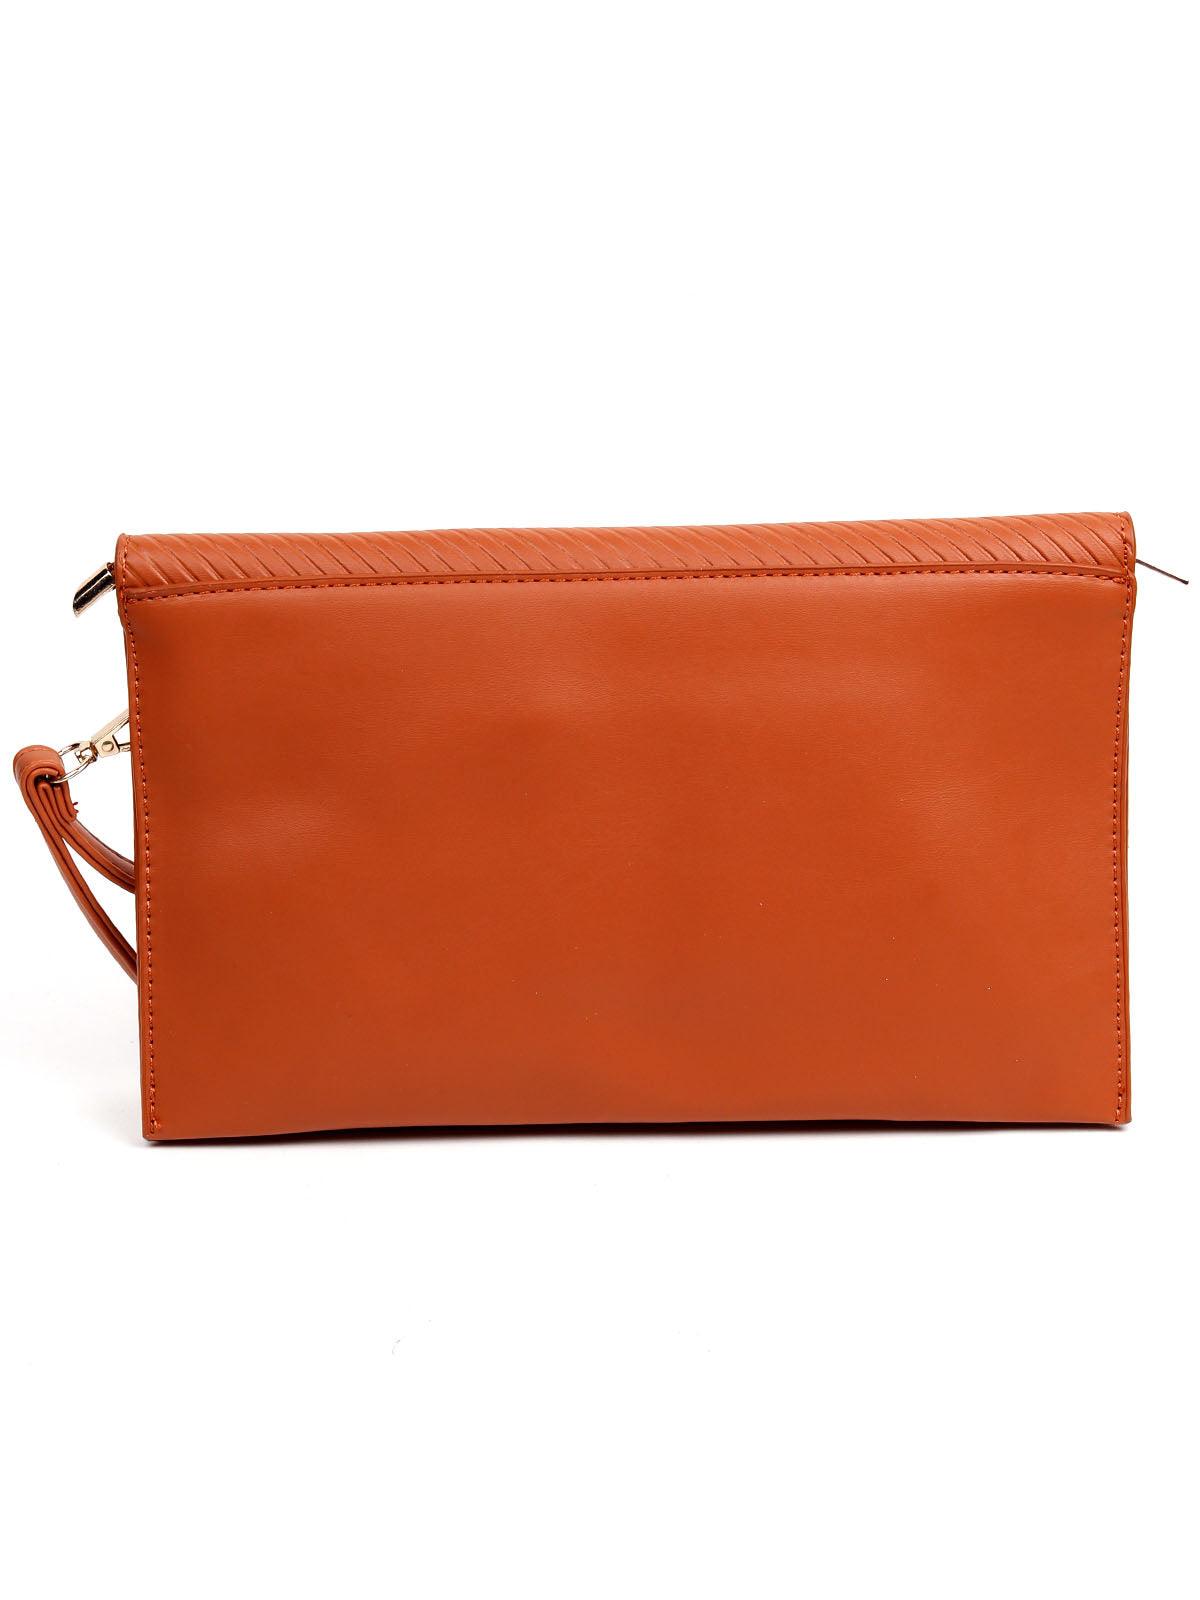 Stunning tan coloured envelope-shaped sling bag for women - Odette